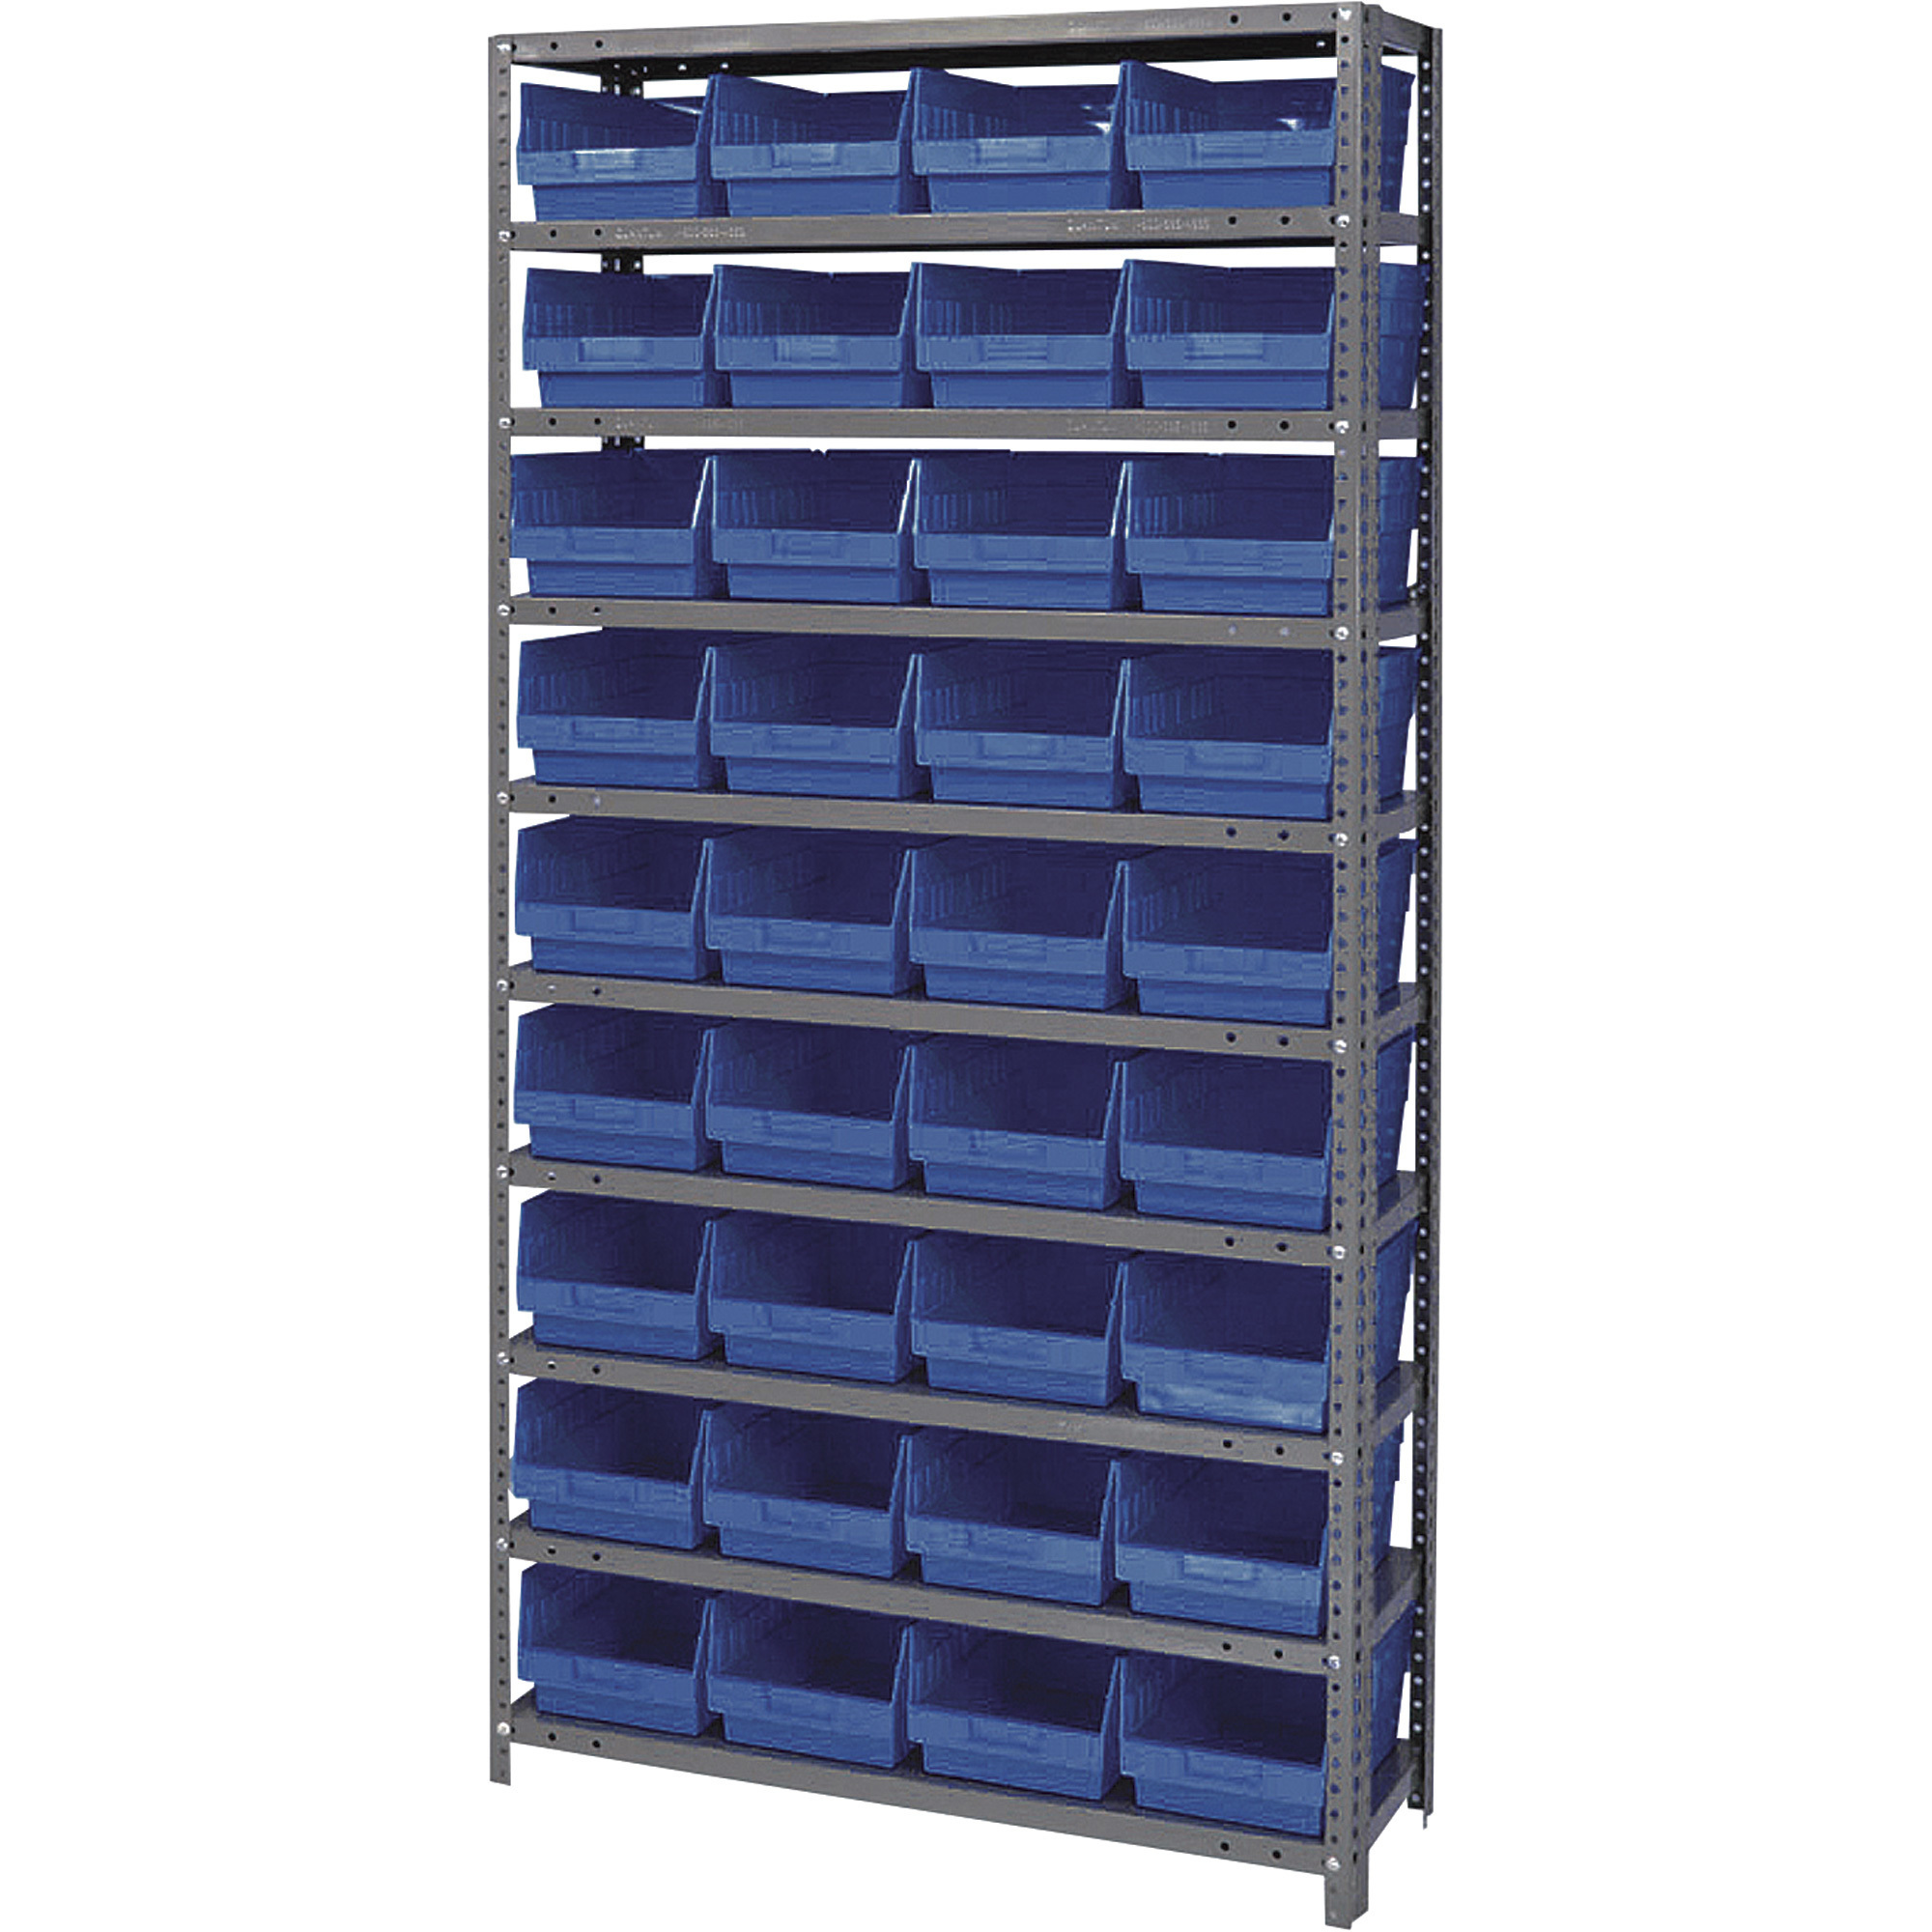 Quantum Storage Metal Shelving Unit with 36 Bins, 36Inch W x 12Inch D x 75Inch H, Blue, Model 1275-207BL